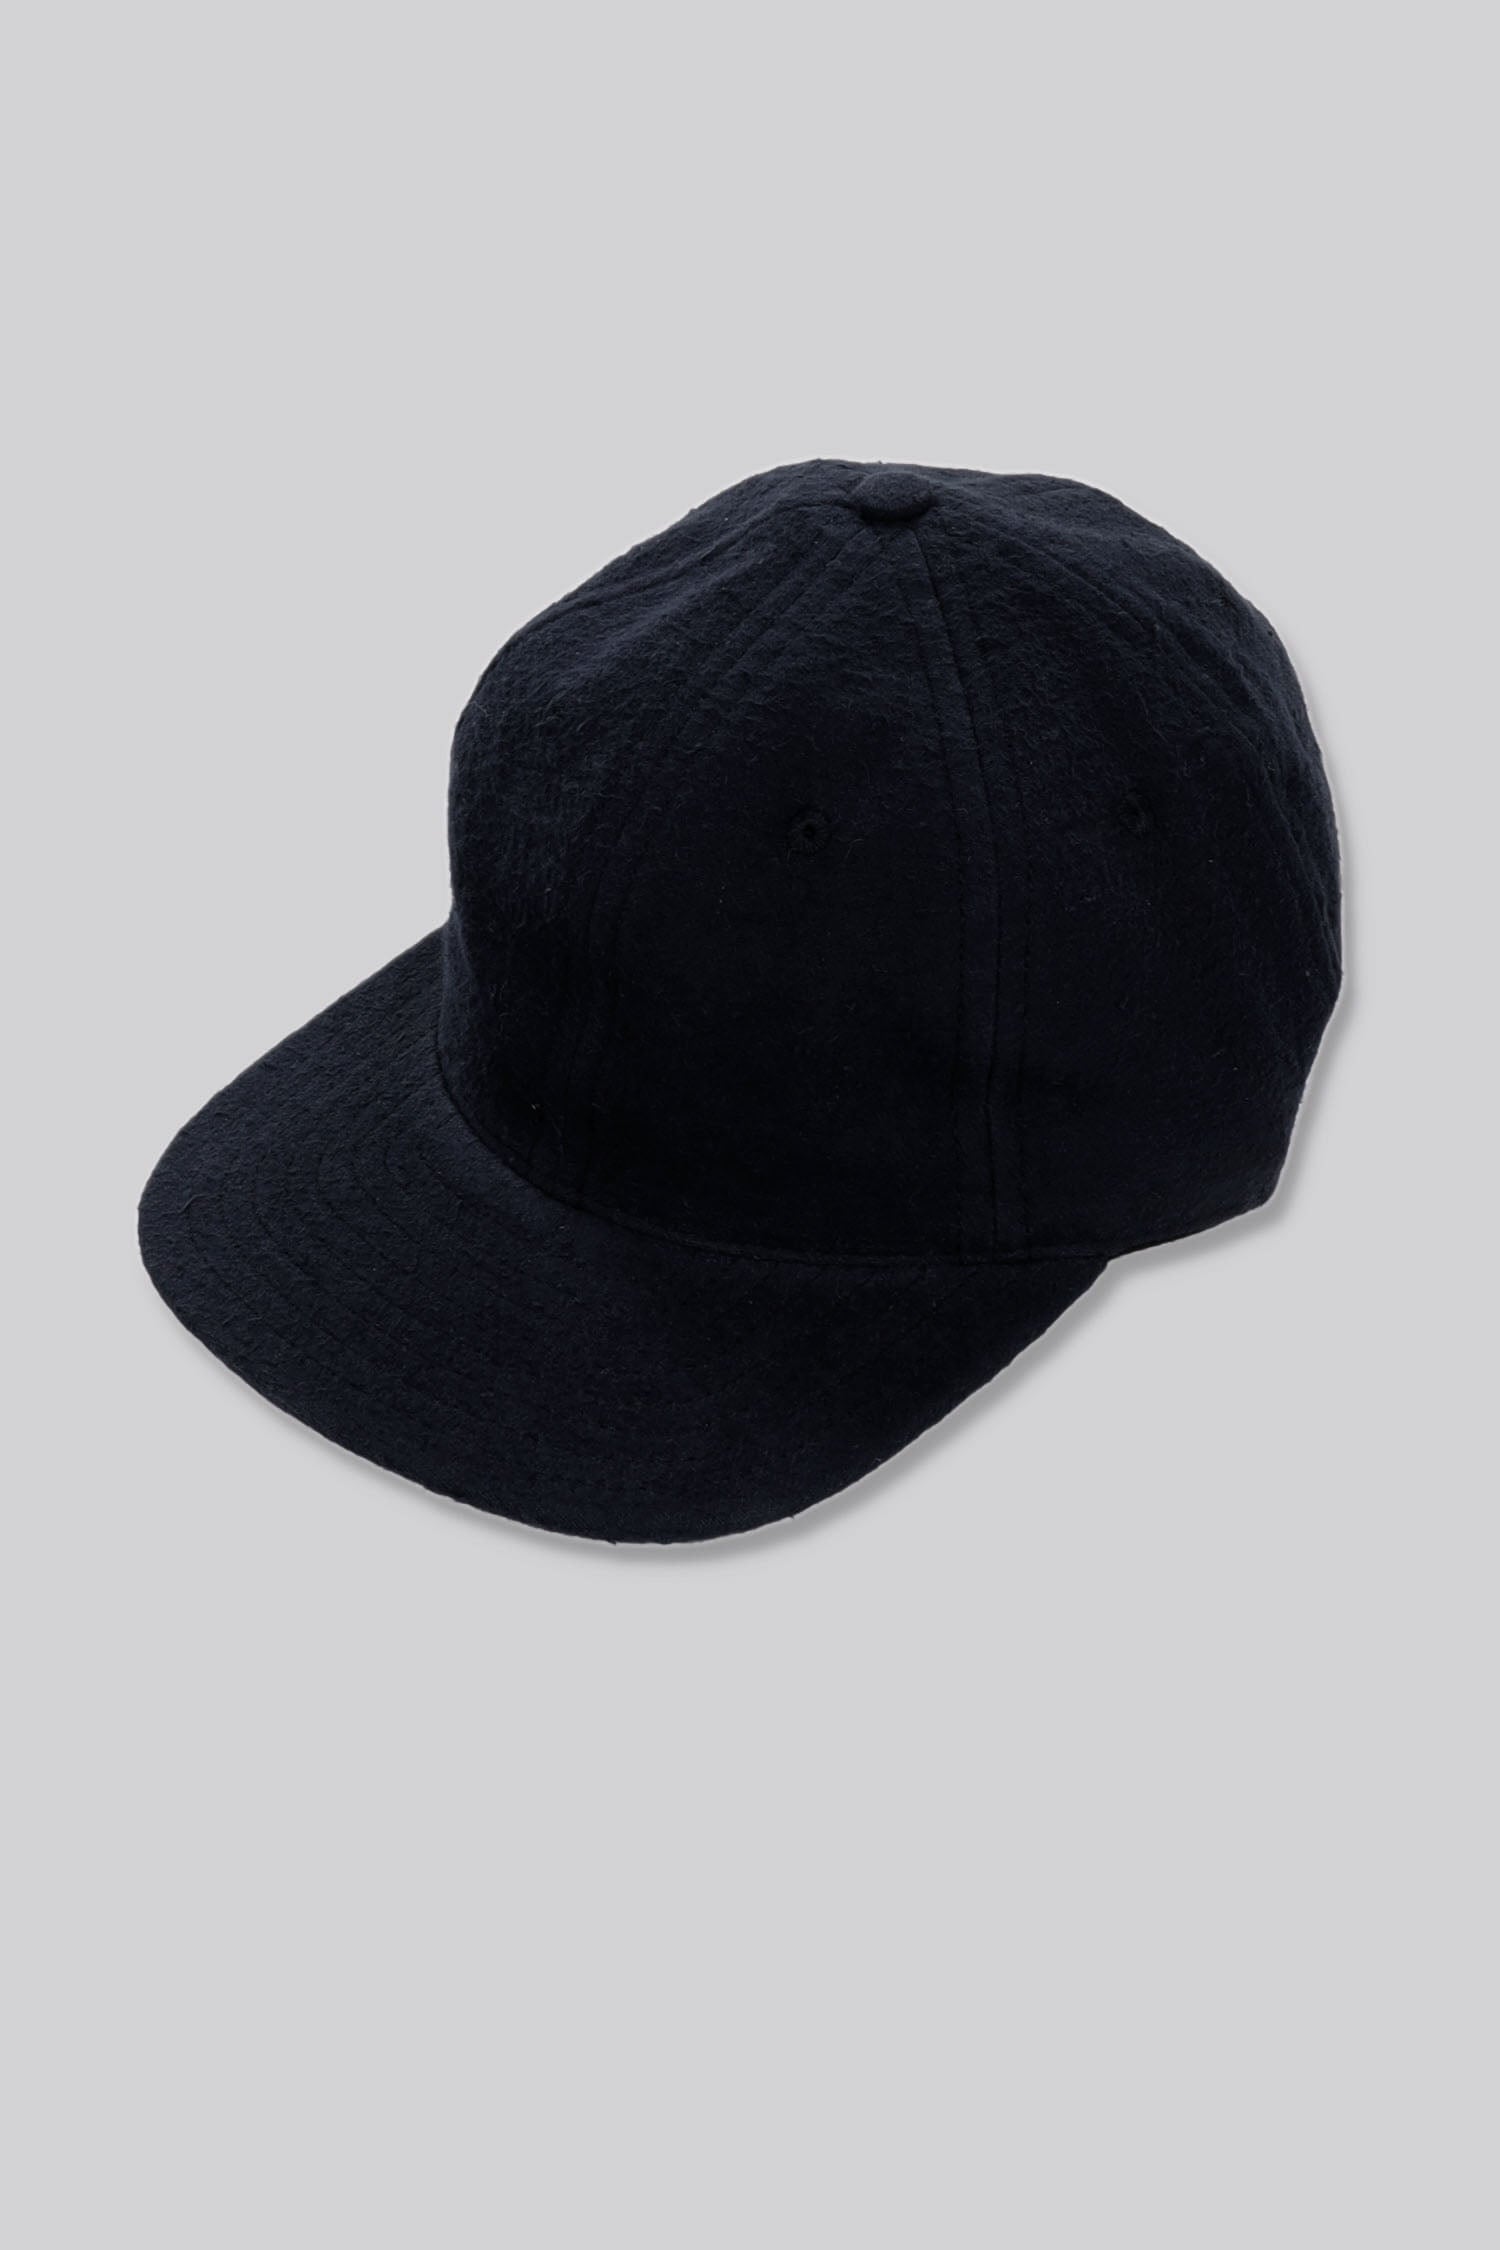 Buy Fishing Hat (01)-Khaki (M) W11S35E at